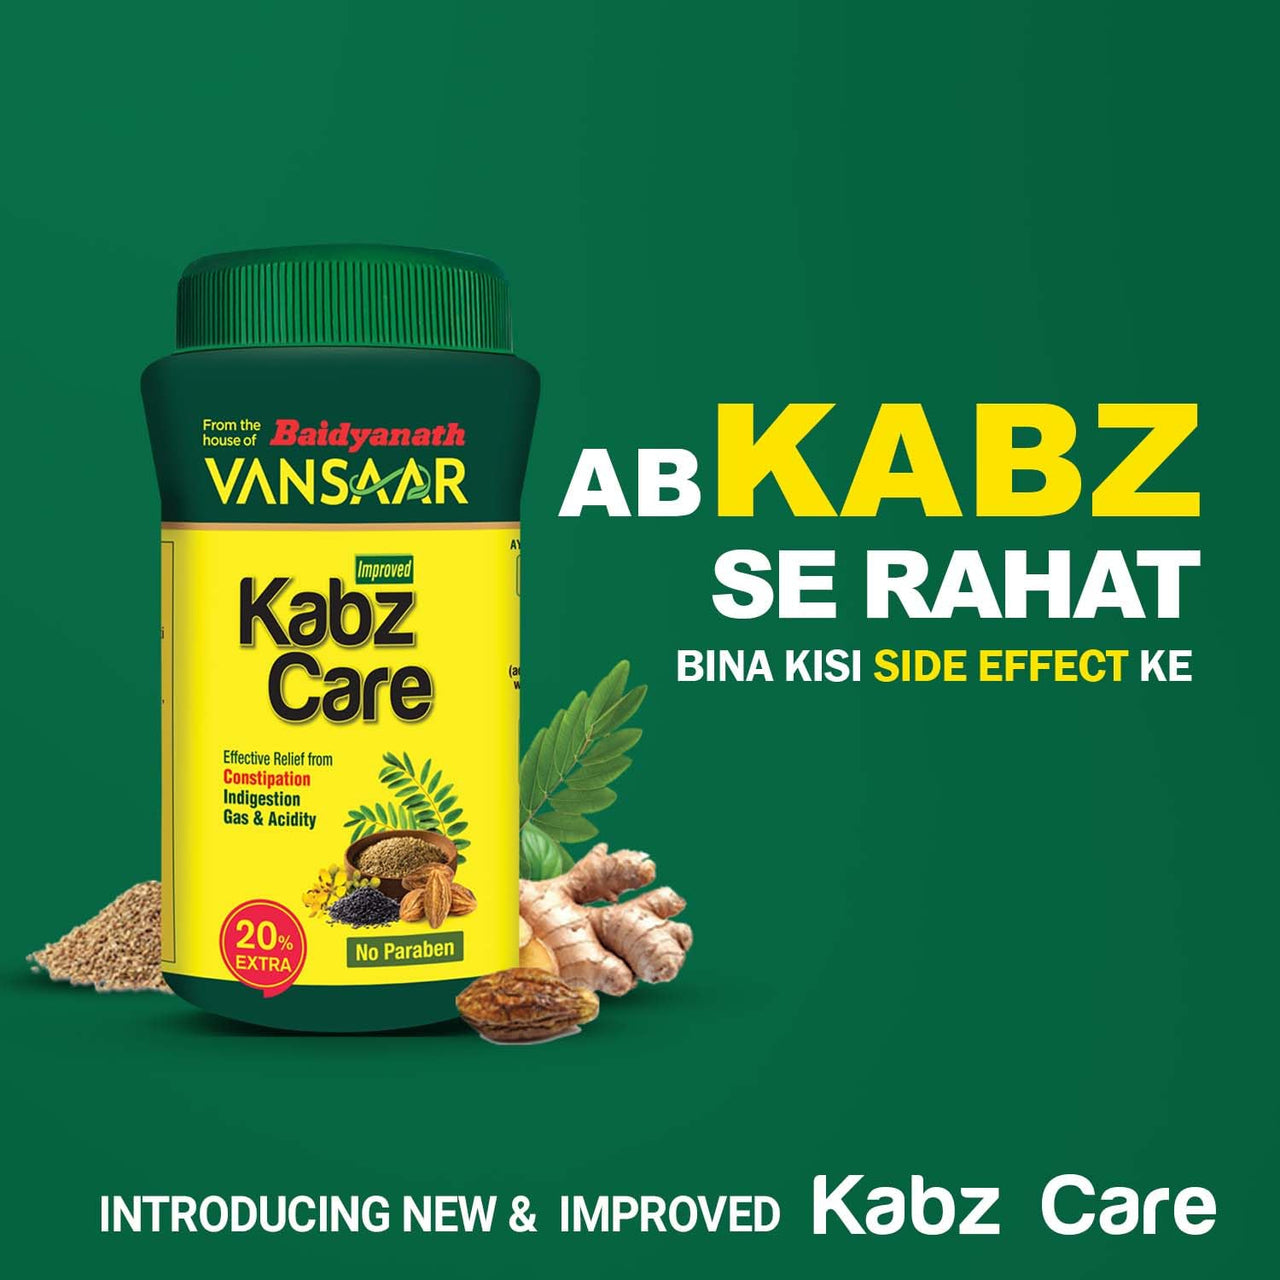 Baidyanath Kabz-Har Ayurvedic Laxative Powder - Distacart